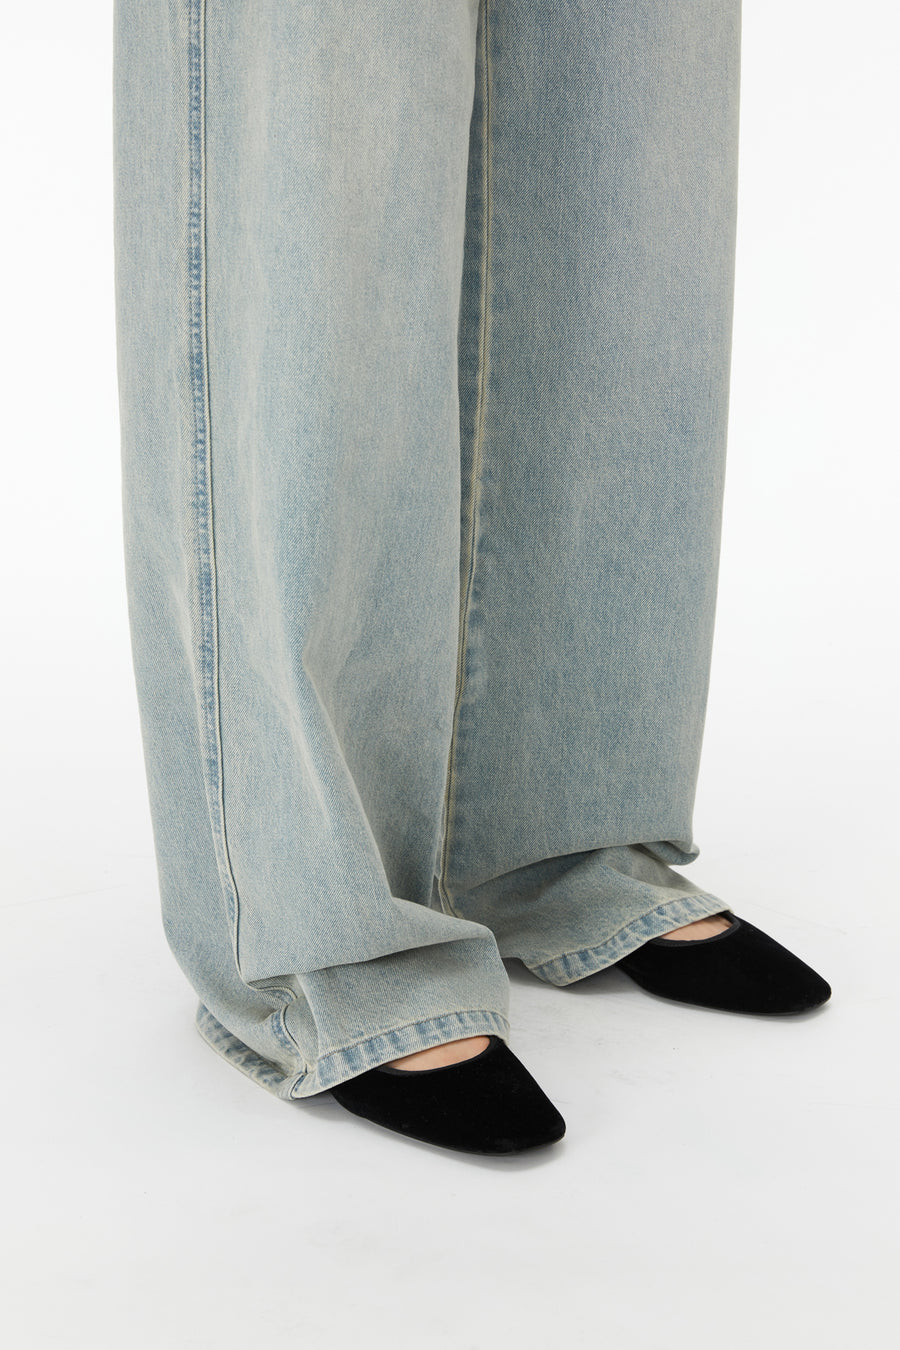 by DOE - Distressed Brushed Denim Jeans